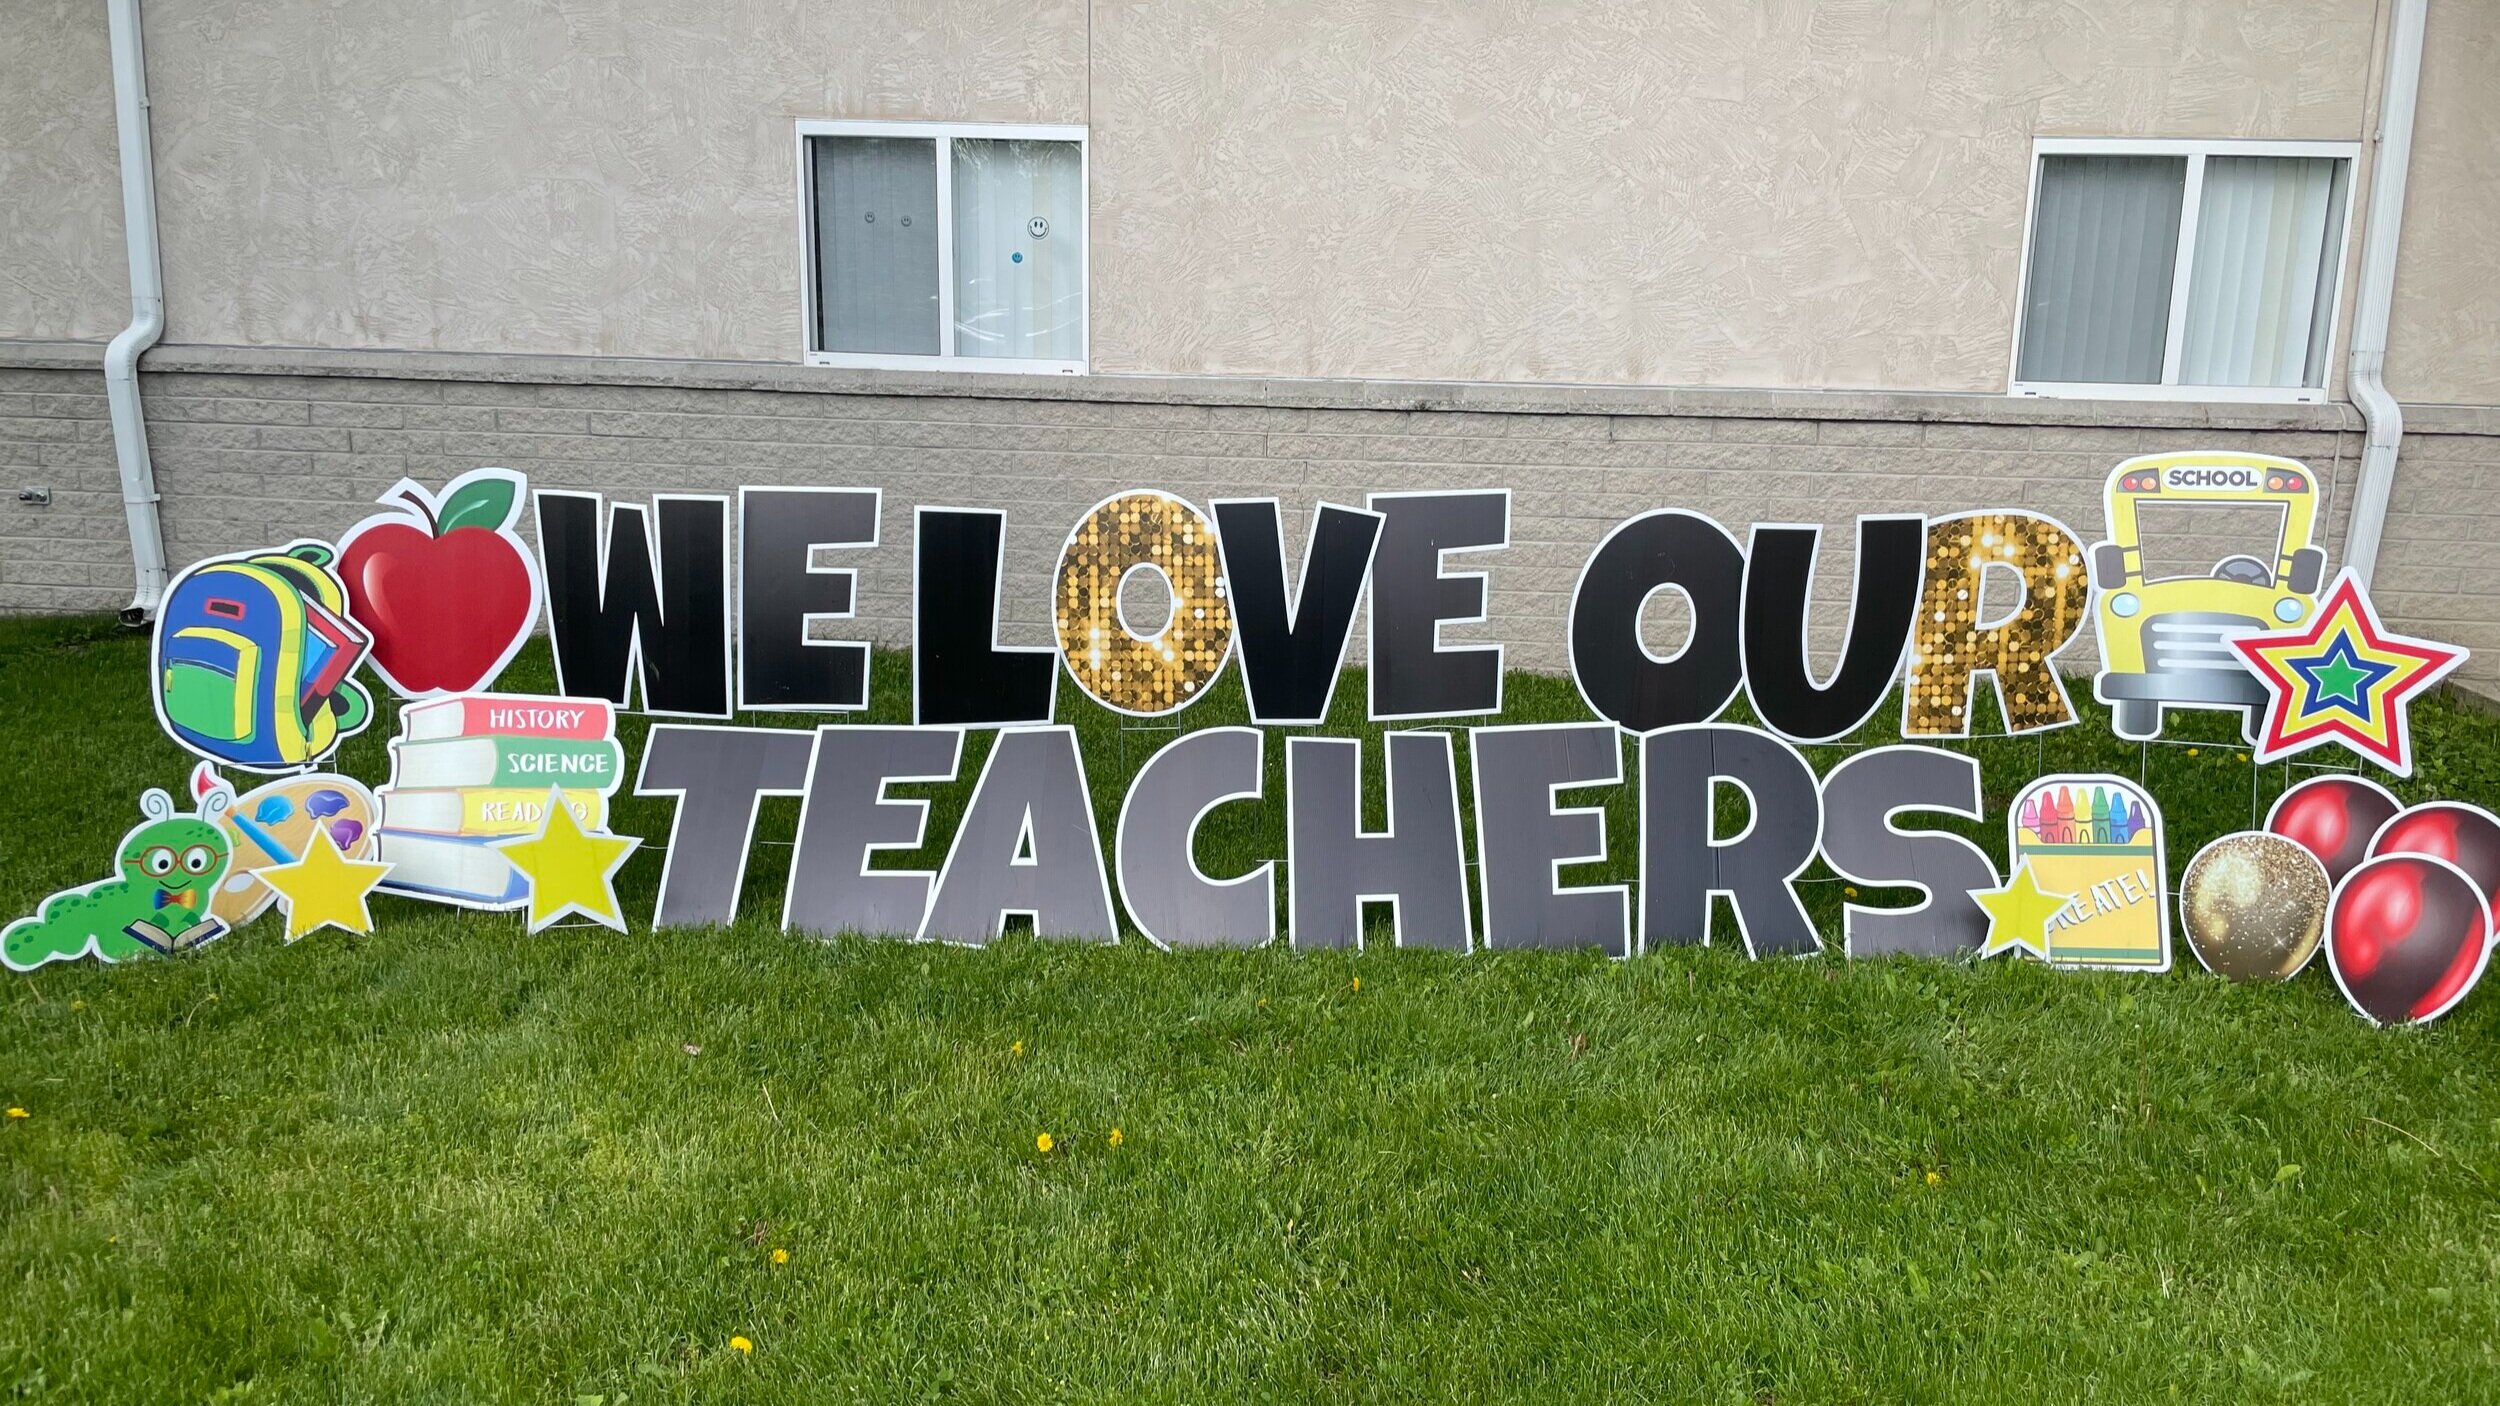 Teacher Appreciation Week Yard Sign